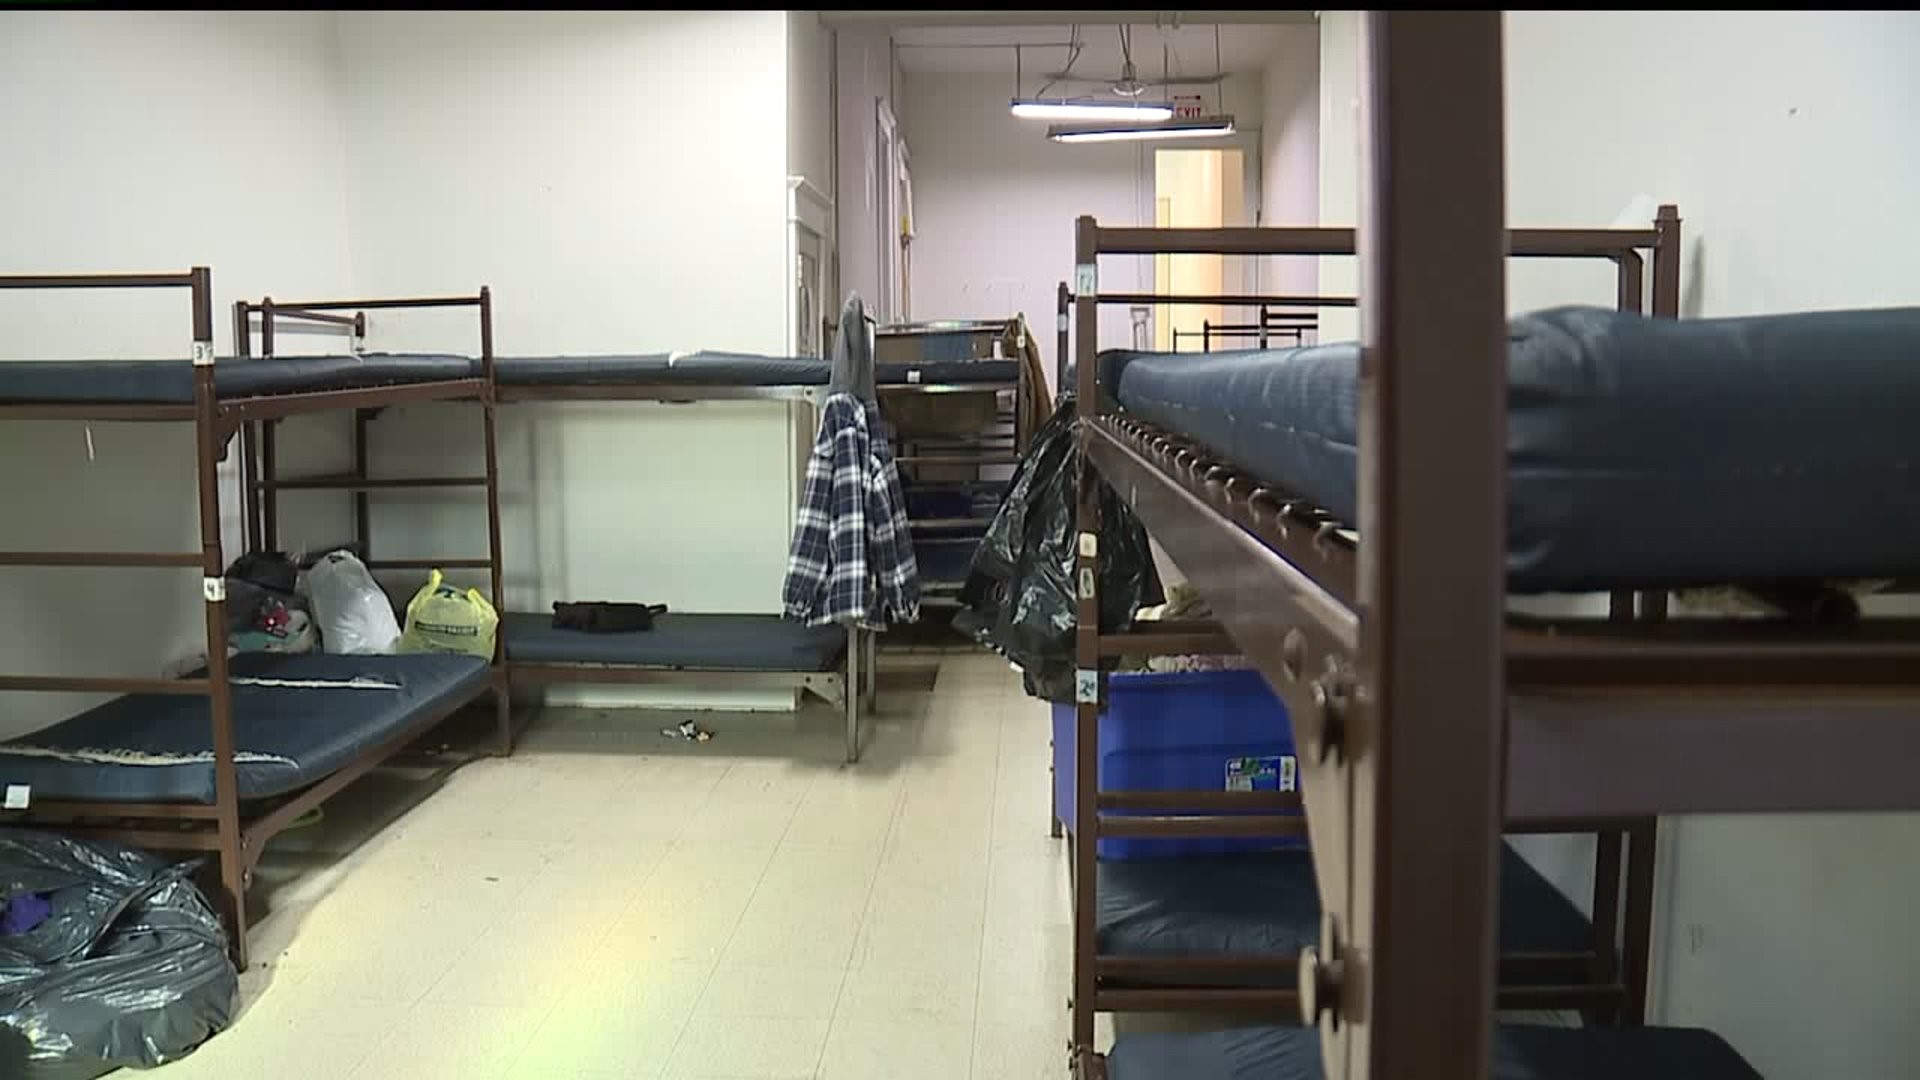 Winter heating bills put programs at risk at York homeless shelter